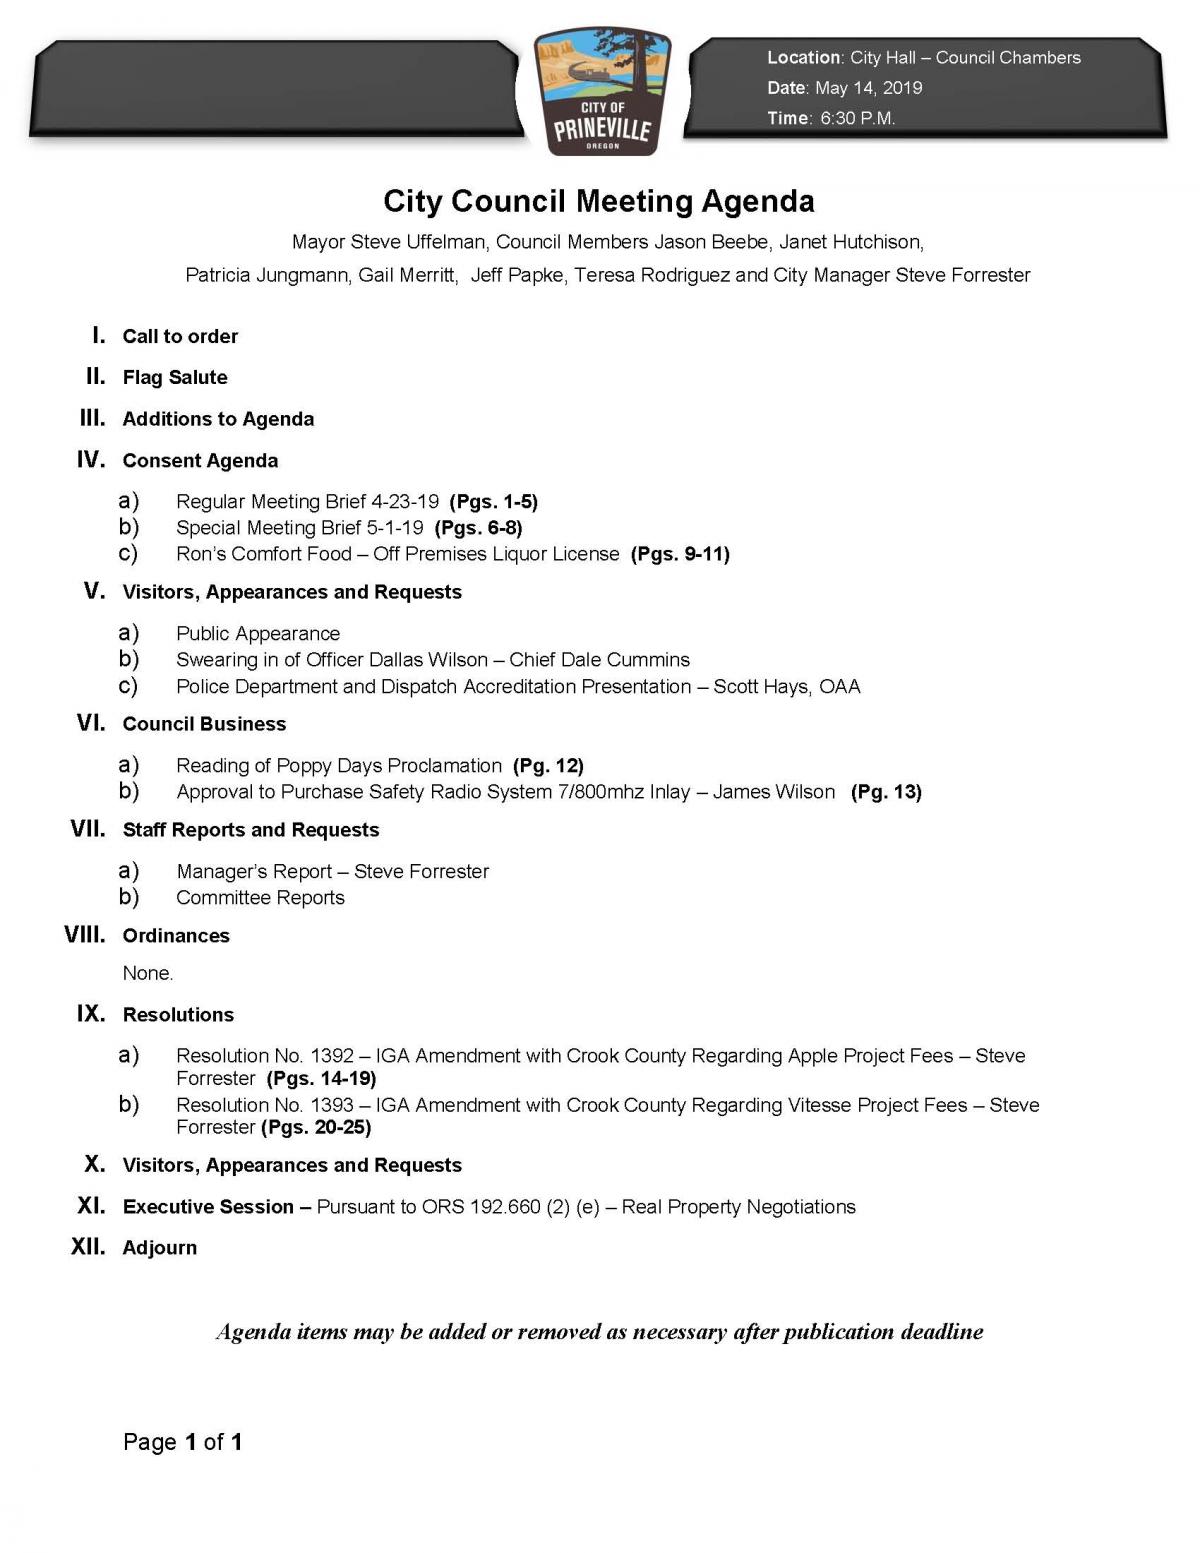 Council Agenda 5-14-19